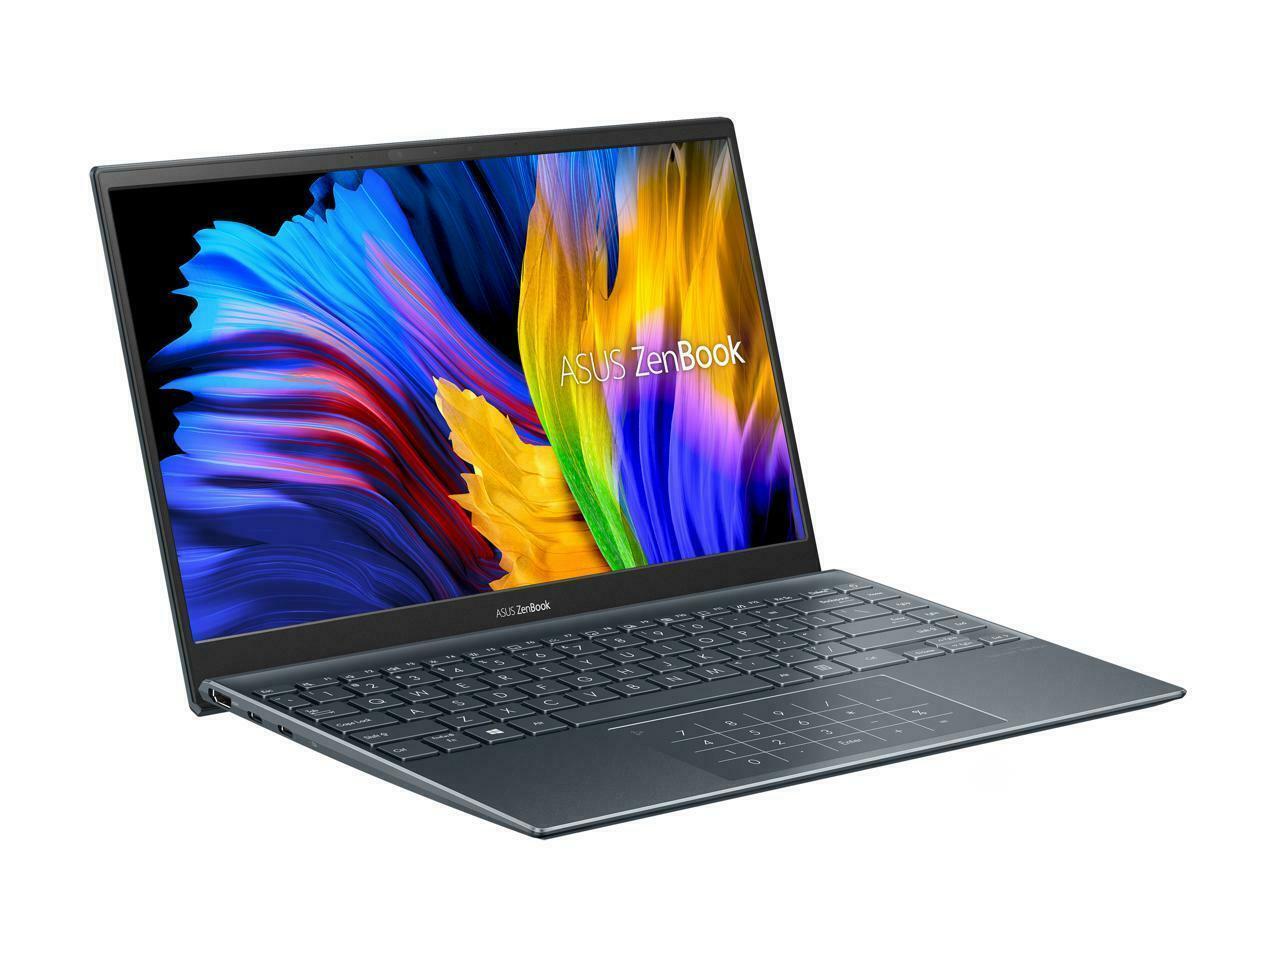 Asus ZenBook 14 Ryzen 7 16GB 1TB Notebook Laptop for $899.99 Shipped